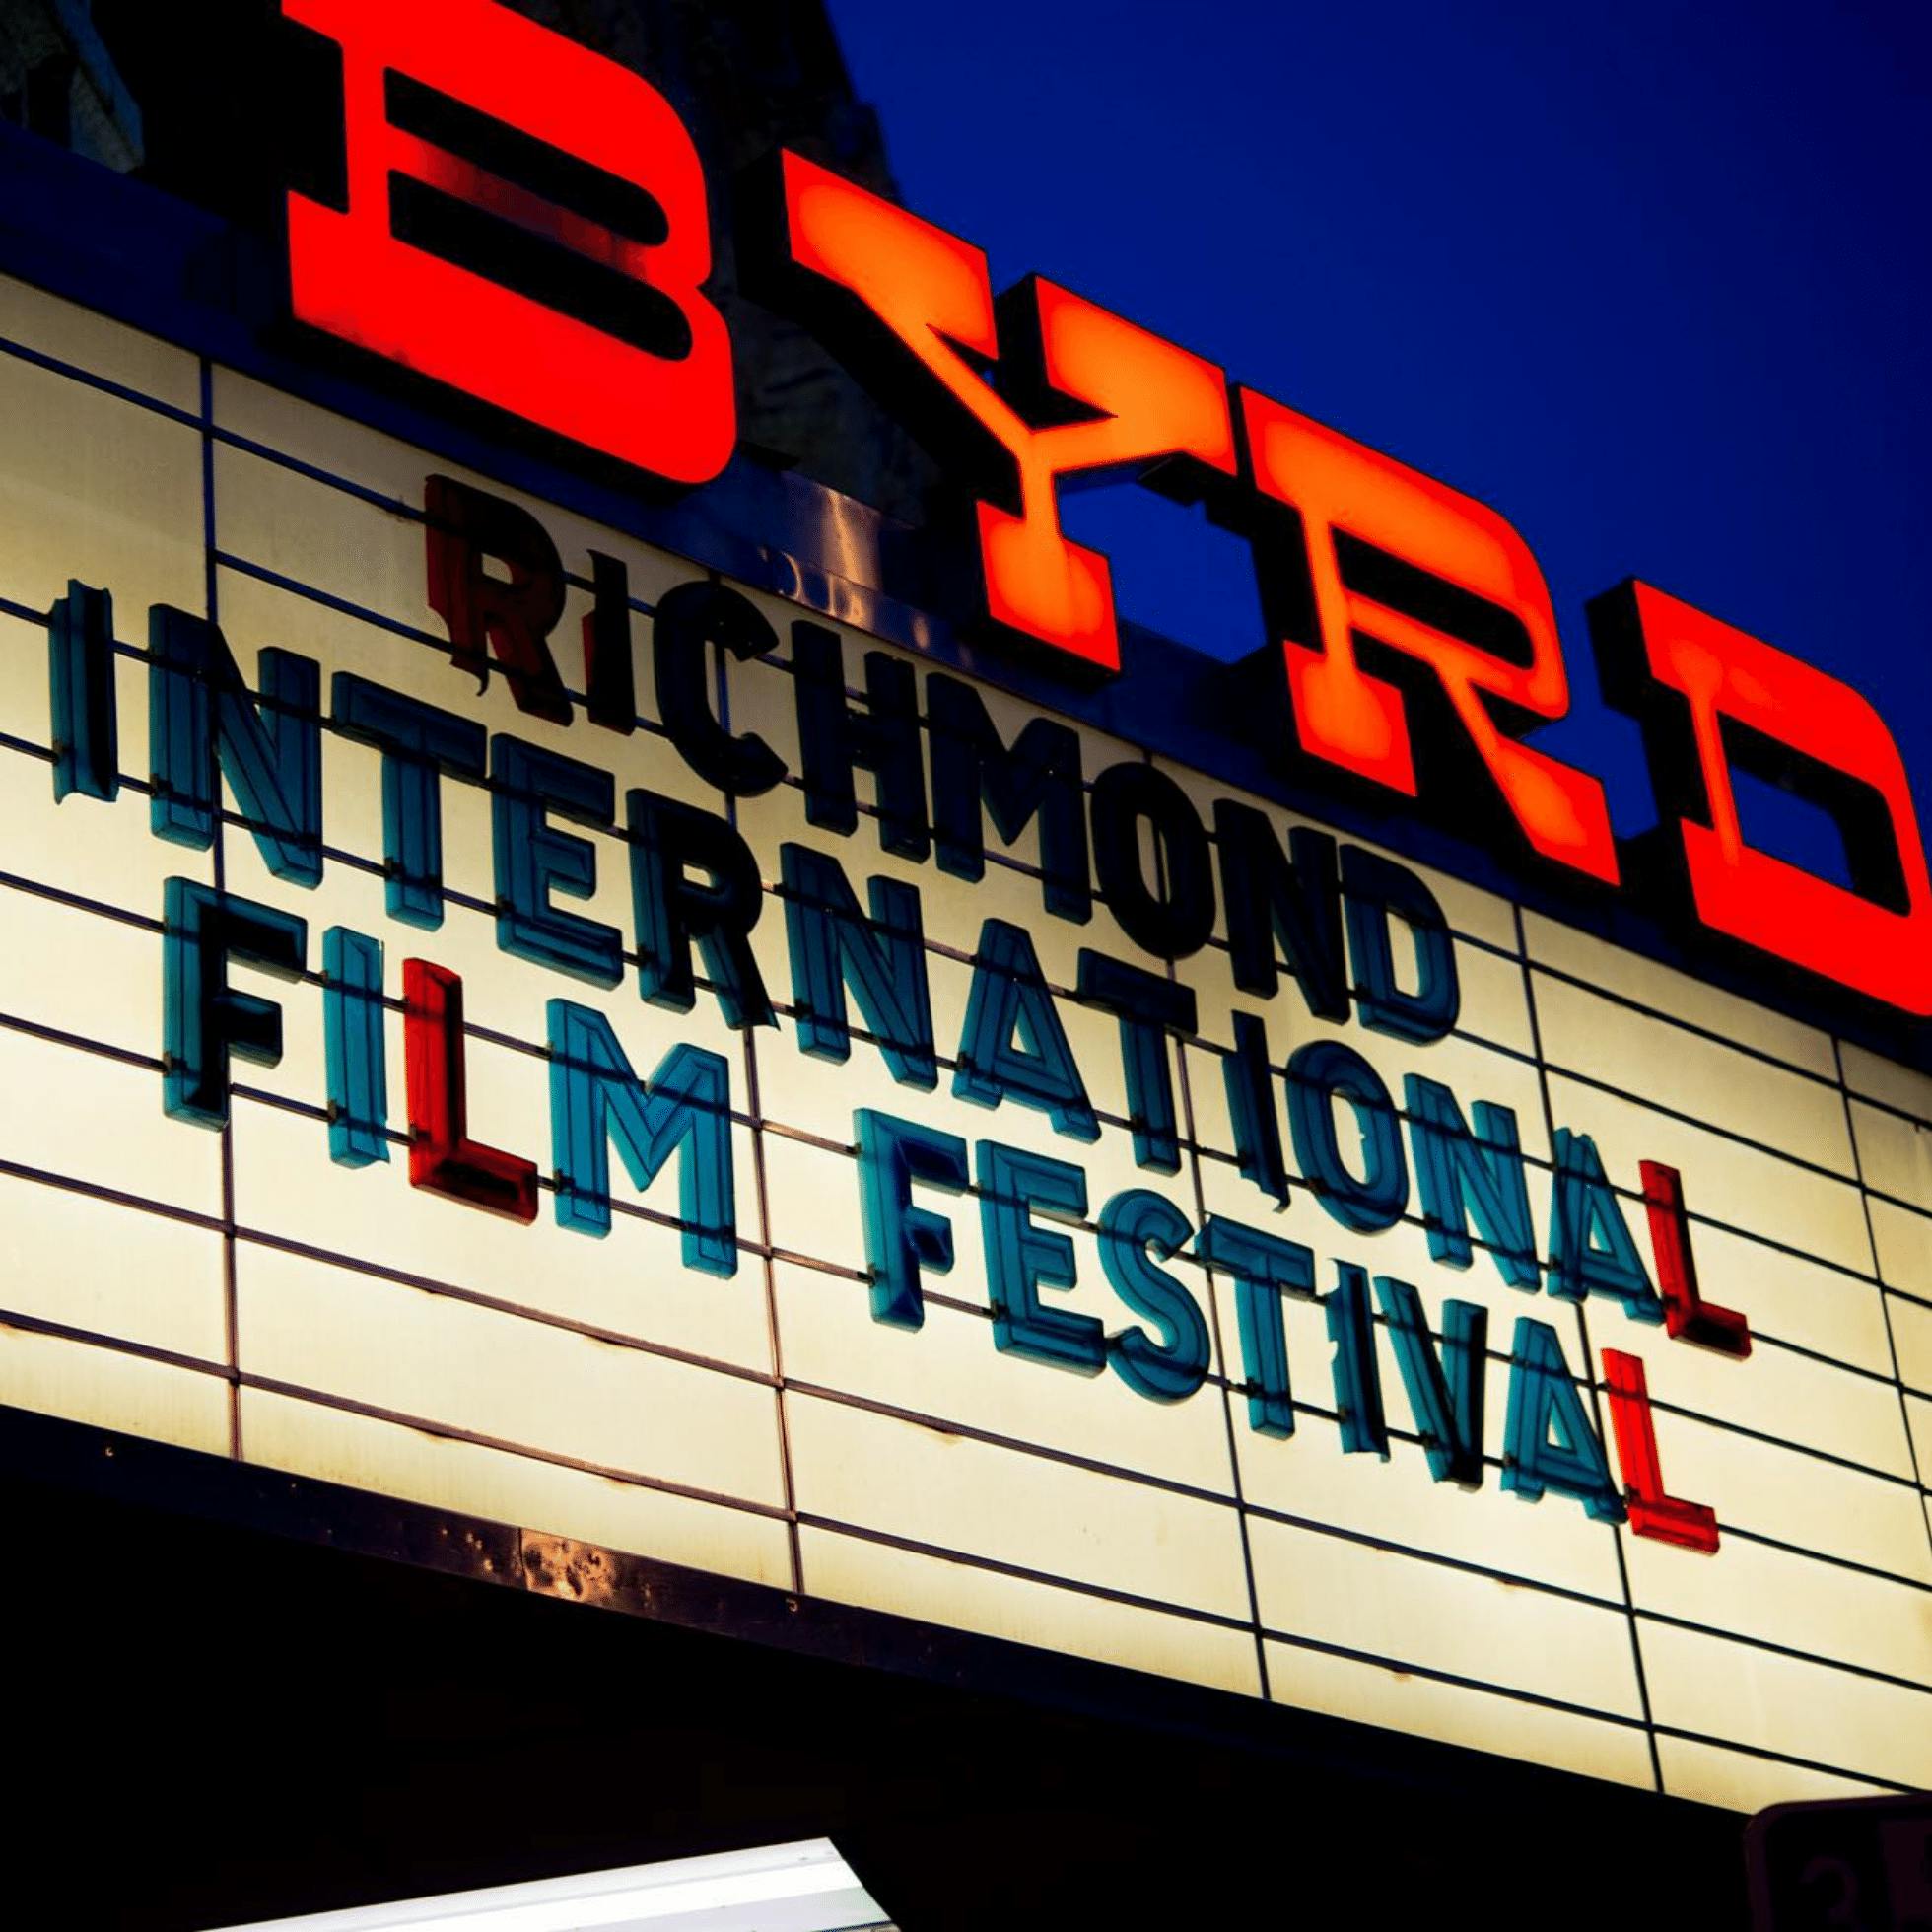 Richmond International Film Festival